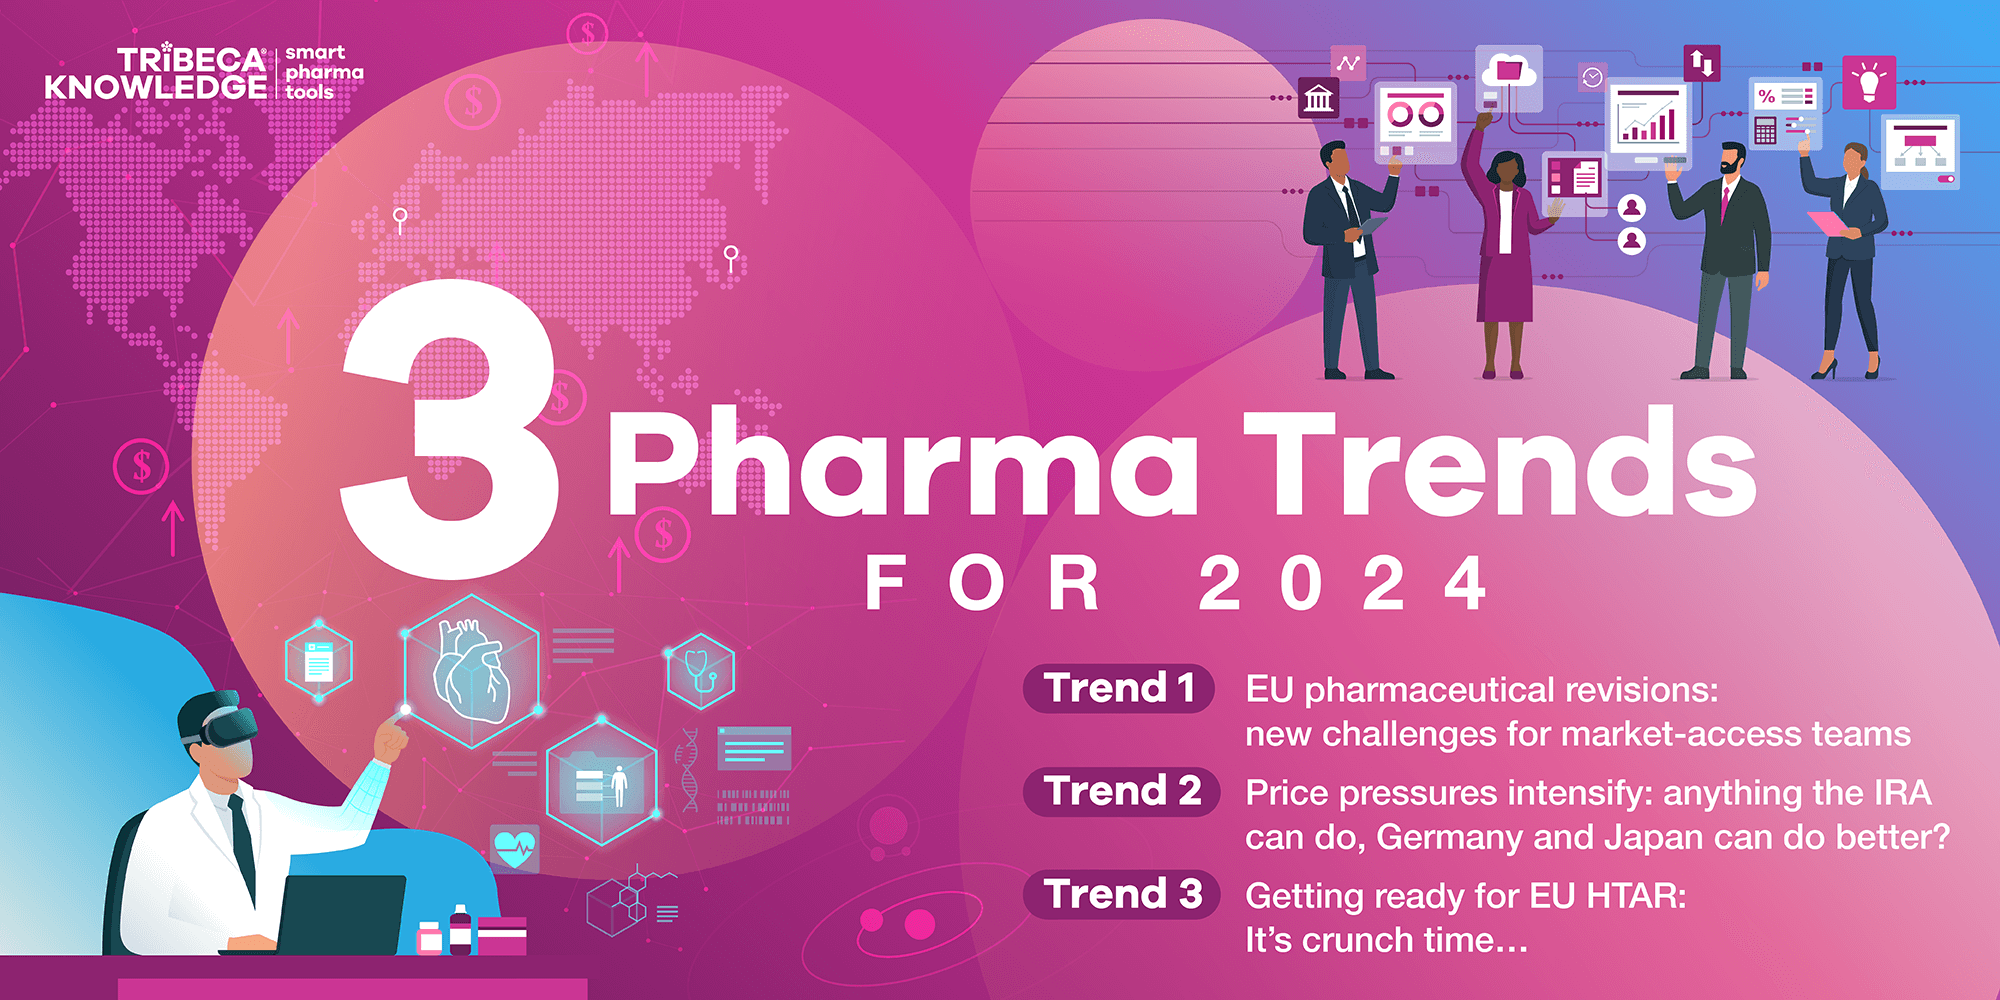 Tribeca 3 Pharma Trends For 2024__Standard